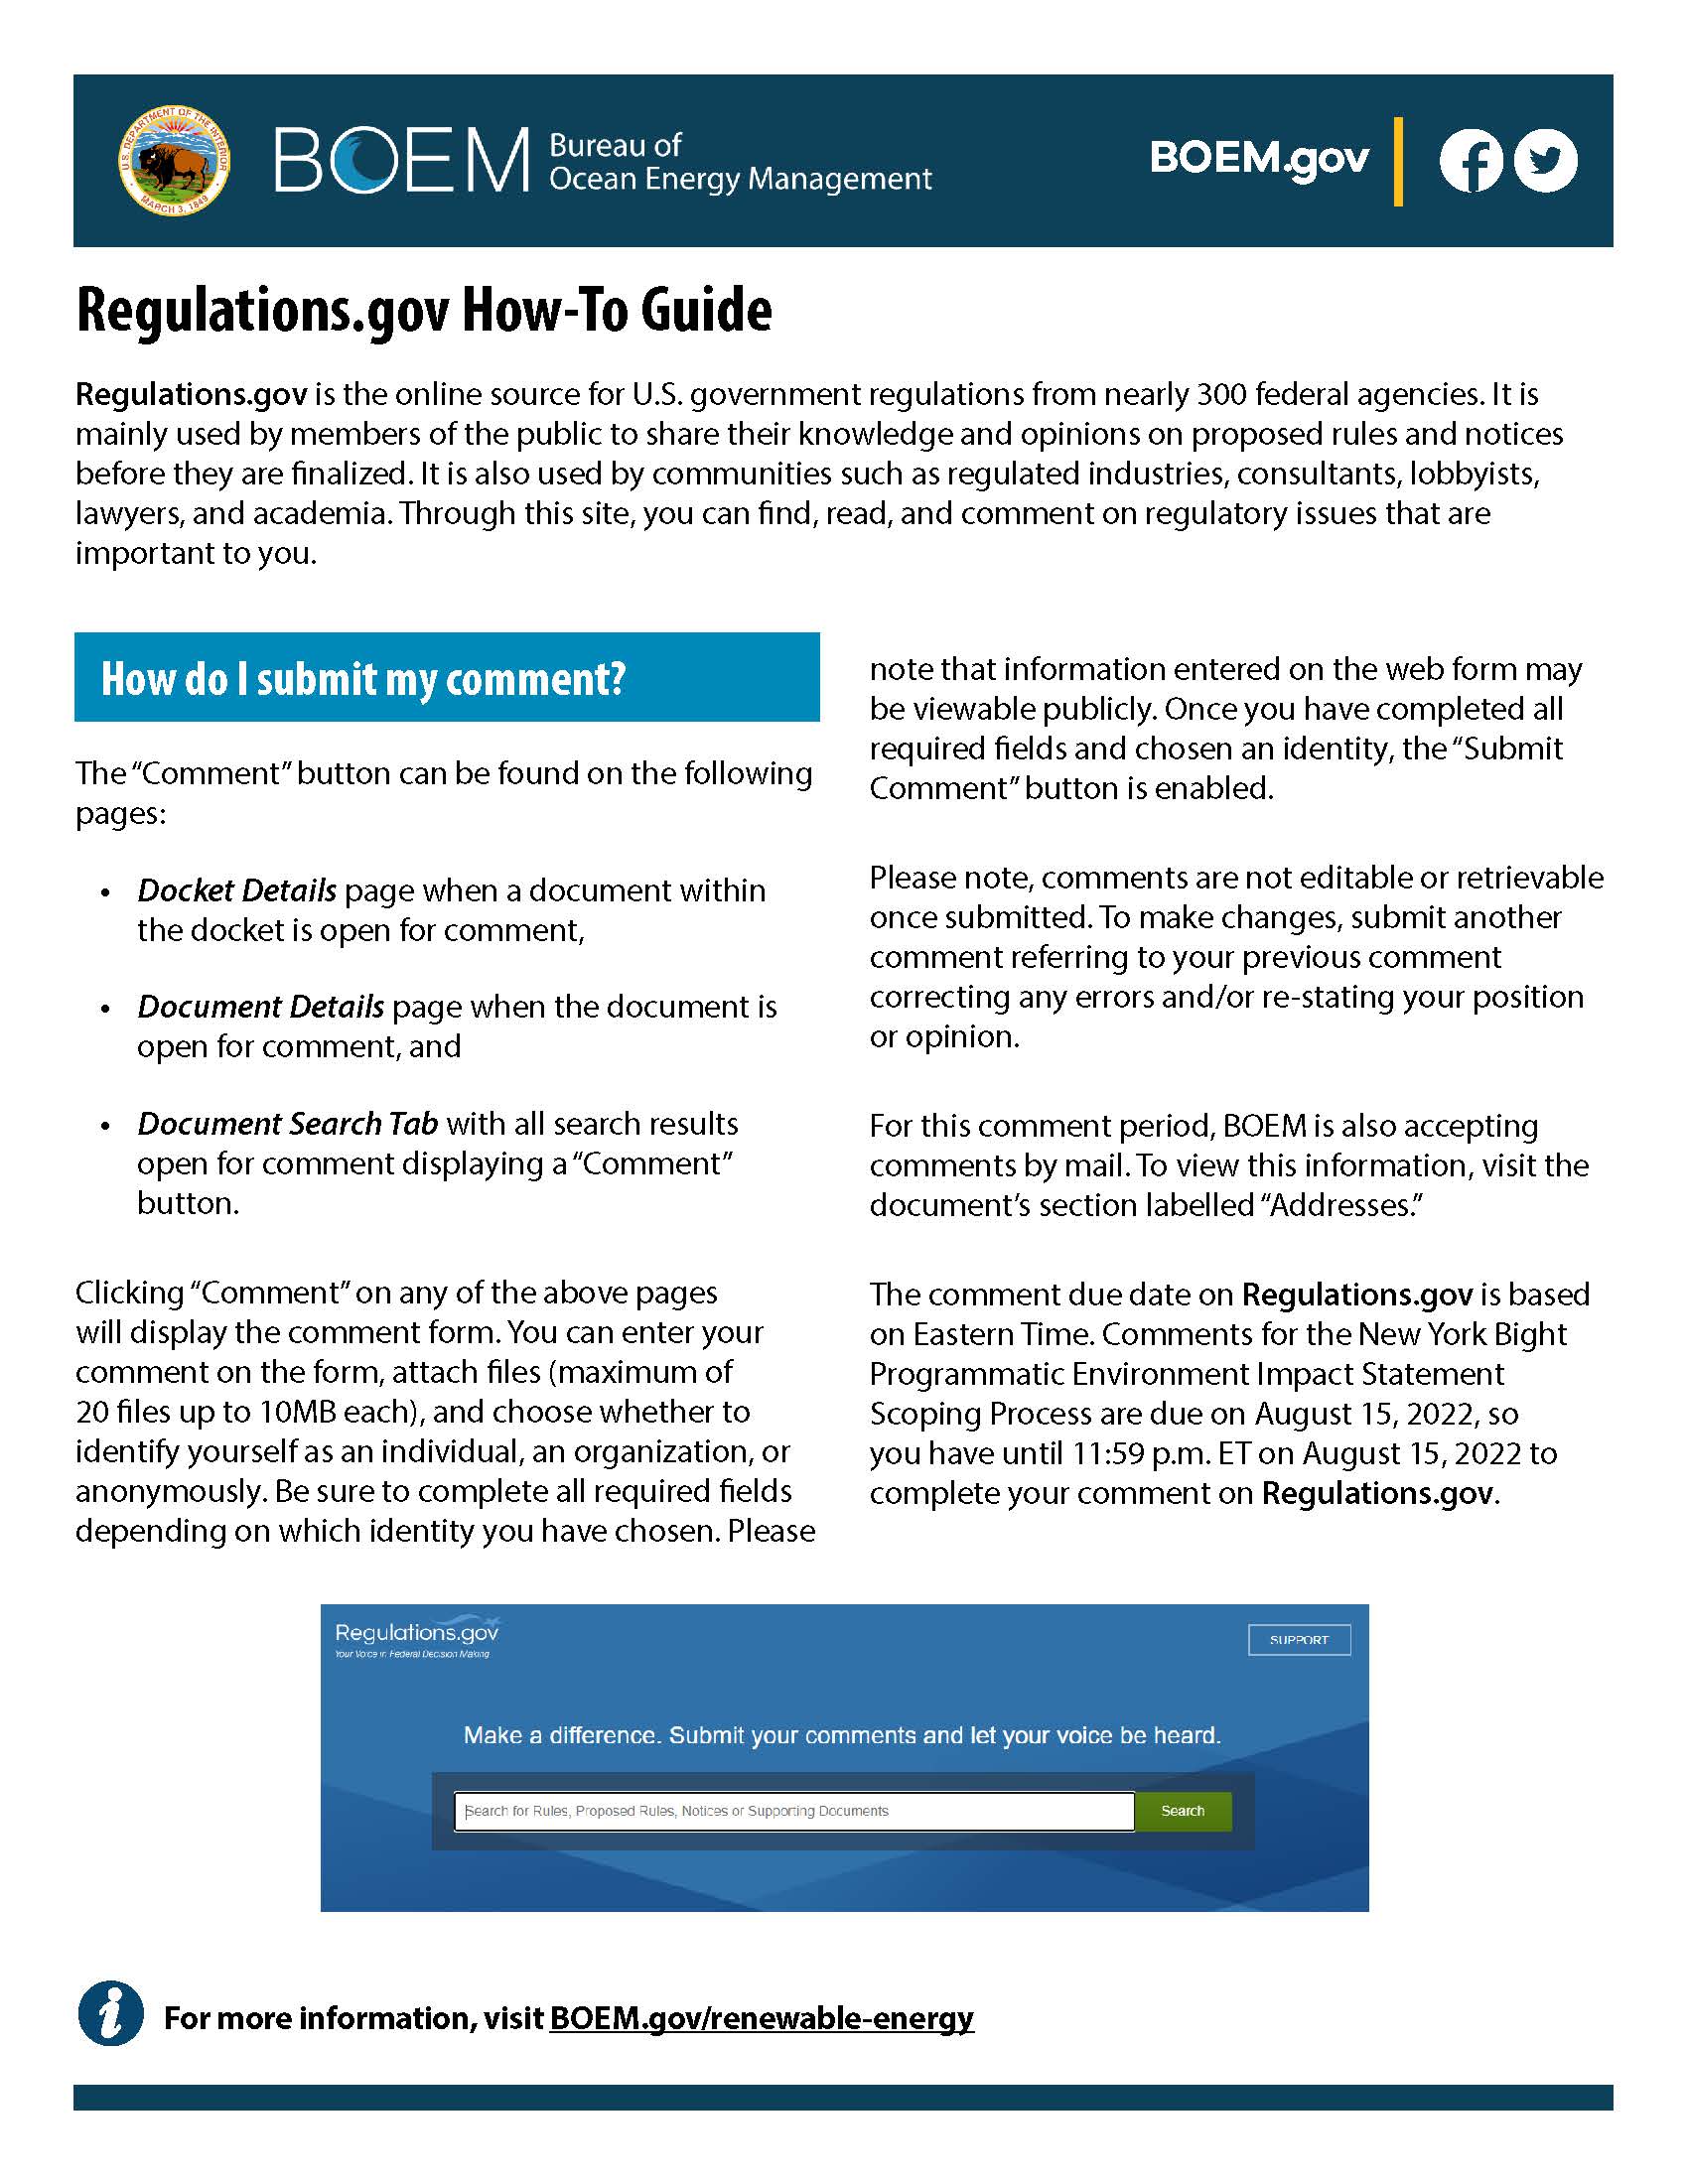 Regulations.gov How To Guide